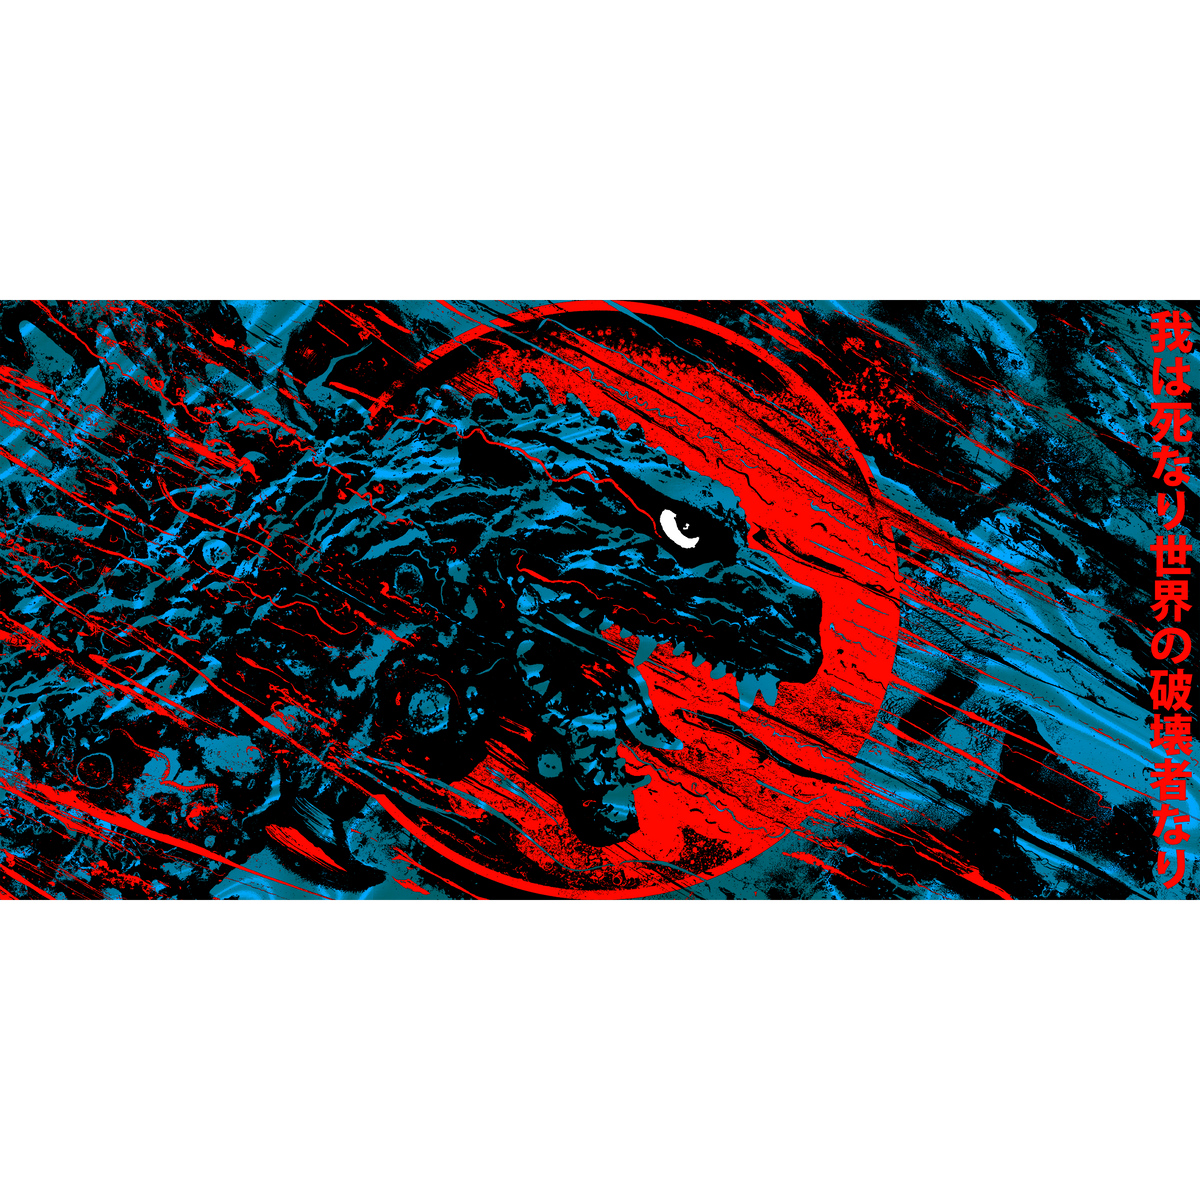 J. Bannon "Destroyer of Worlds: MIRROR LAVA BLUE" Silkscreened Print